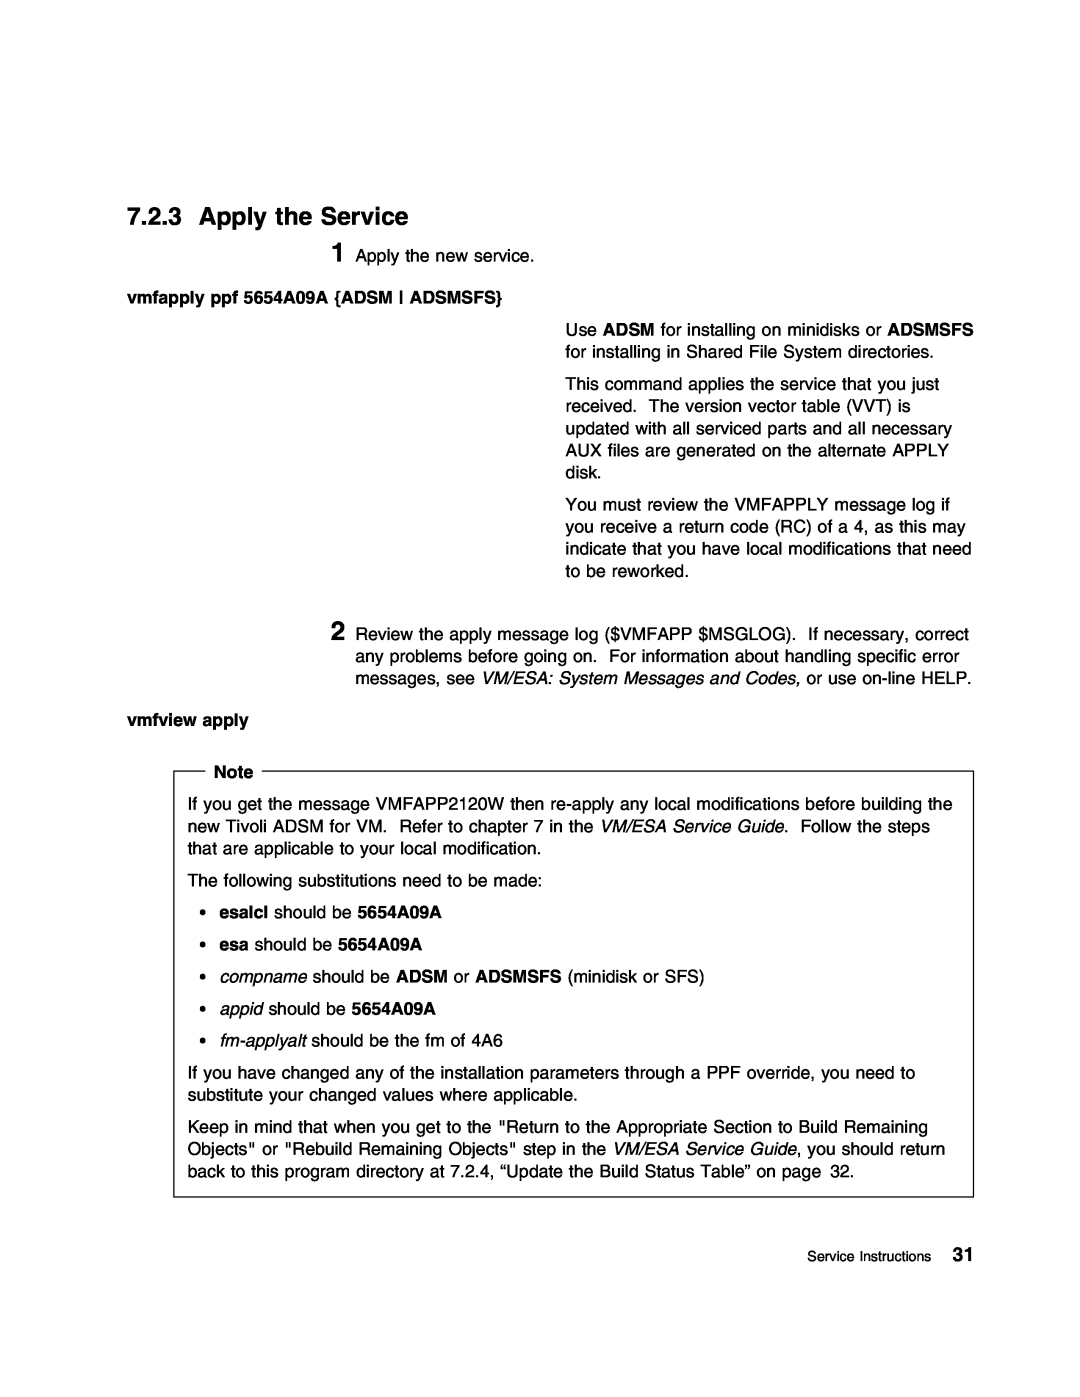 IBM 5697-VM3 manual Apply the Service, vmfapply ppf 5654A09A ADSM ADSMSFS, vmfview apply 